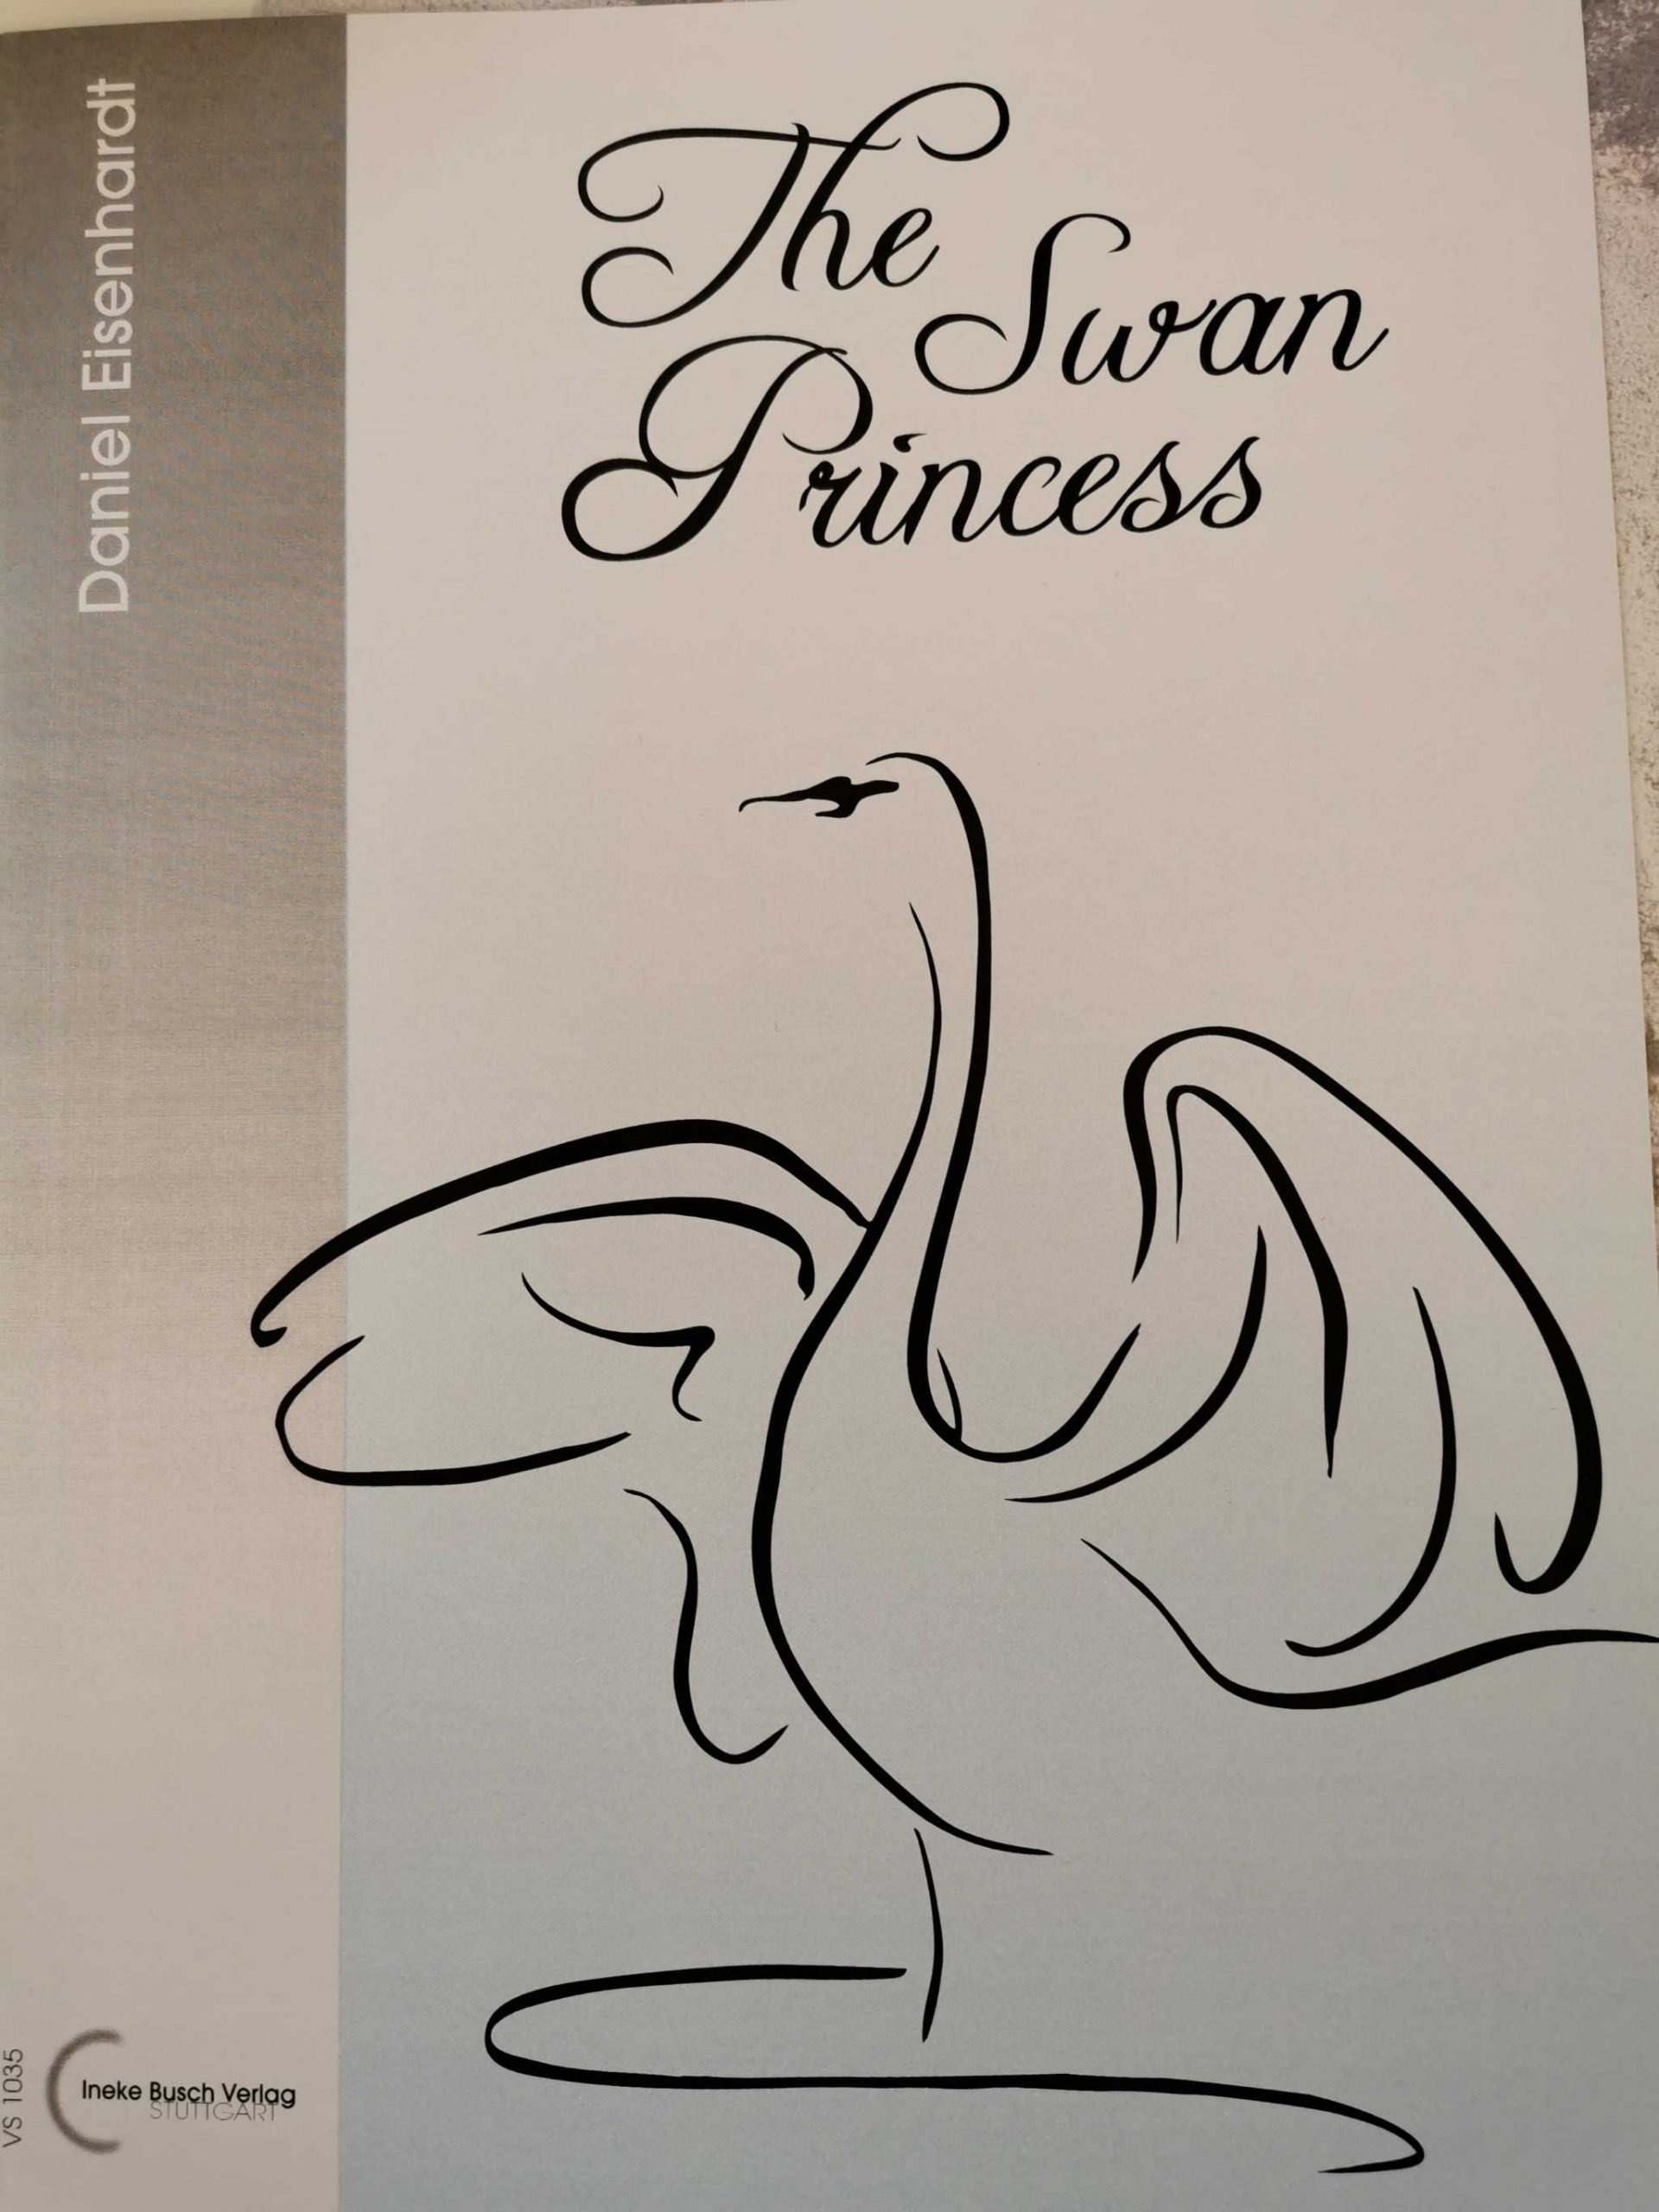 The Swan Princess by Daniel Eisenhardt